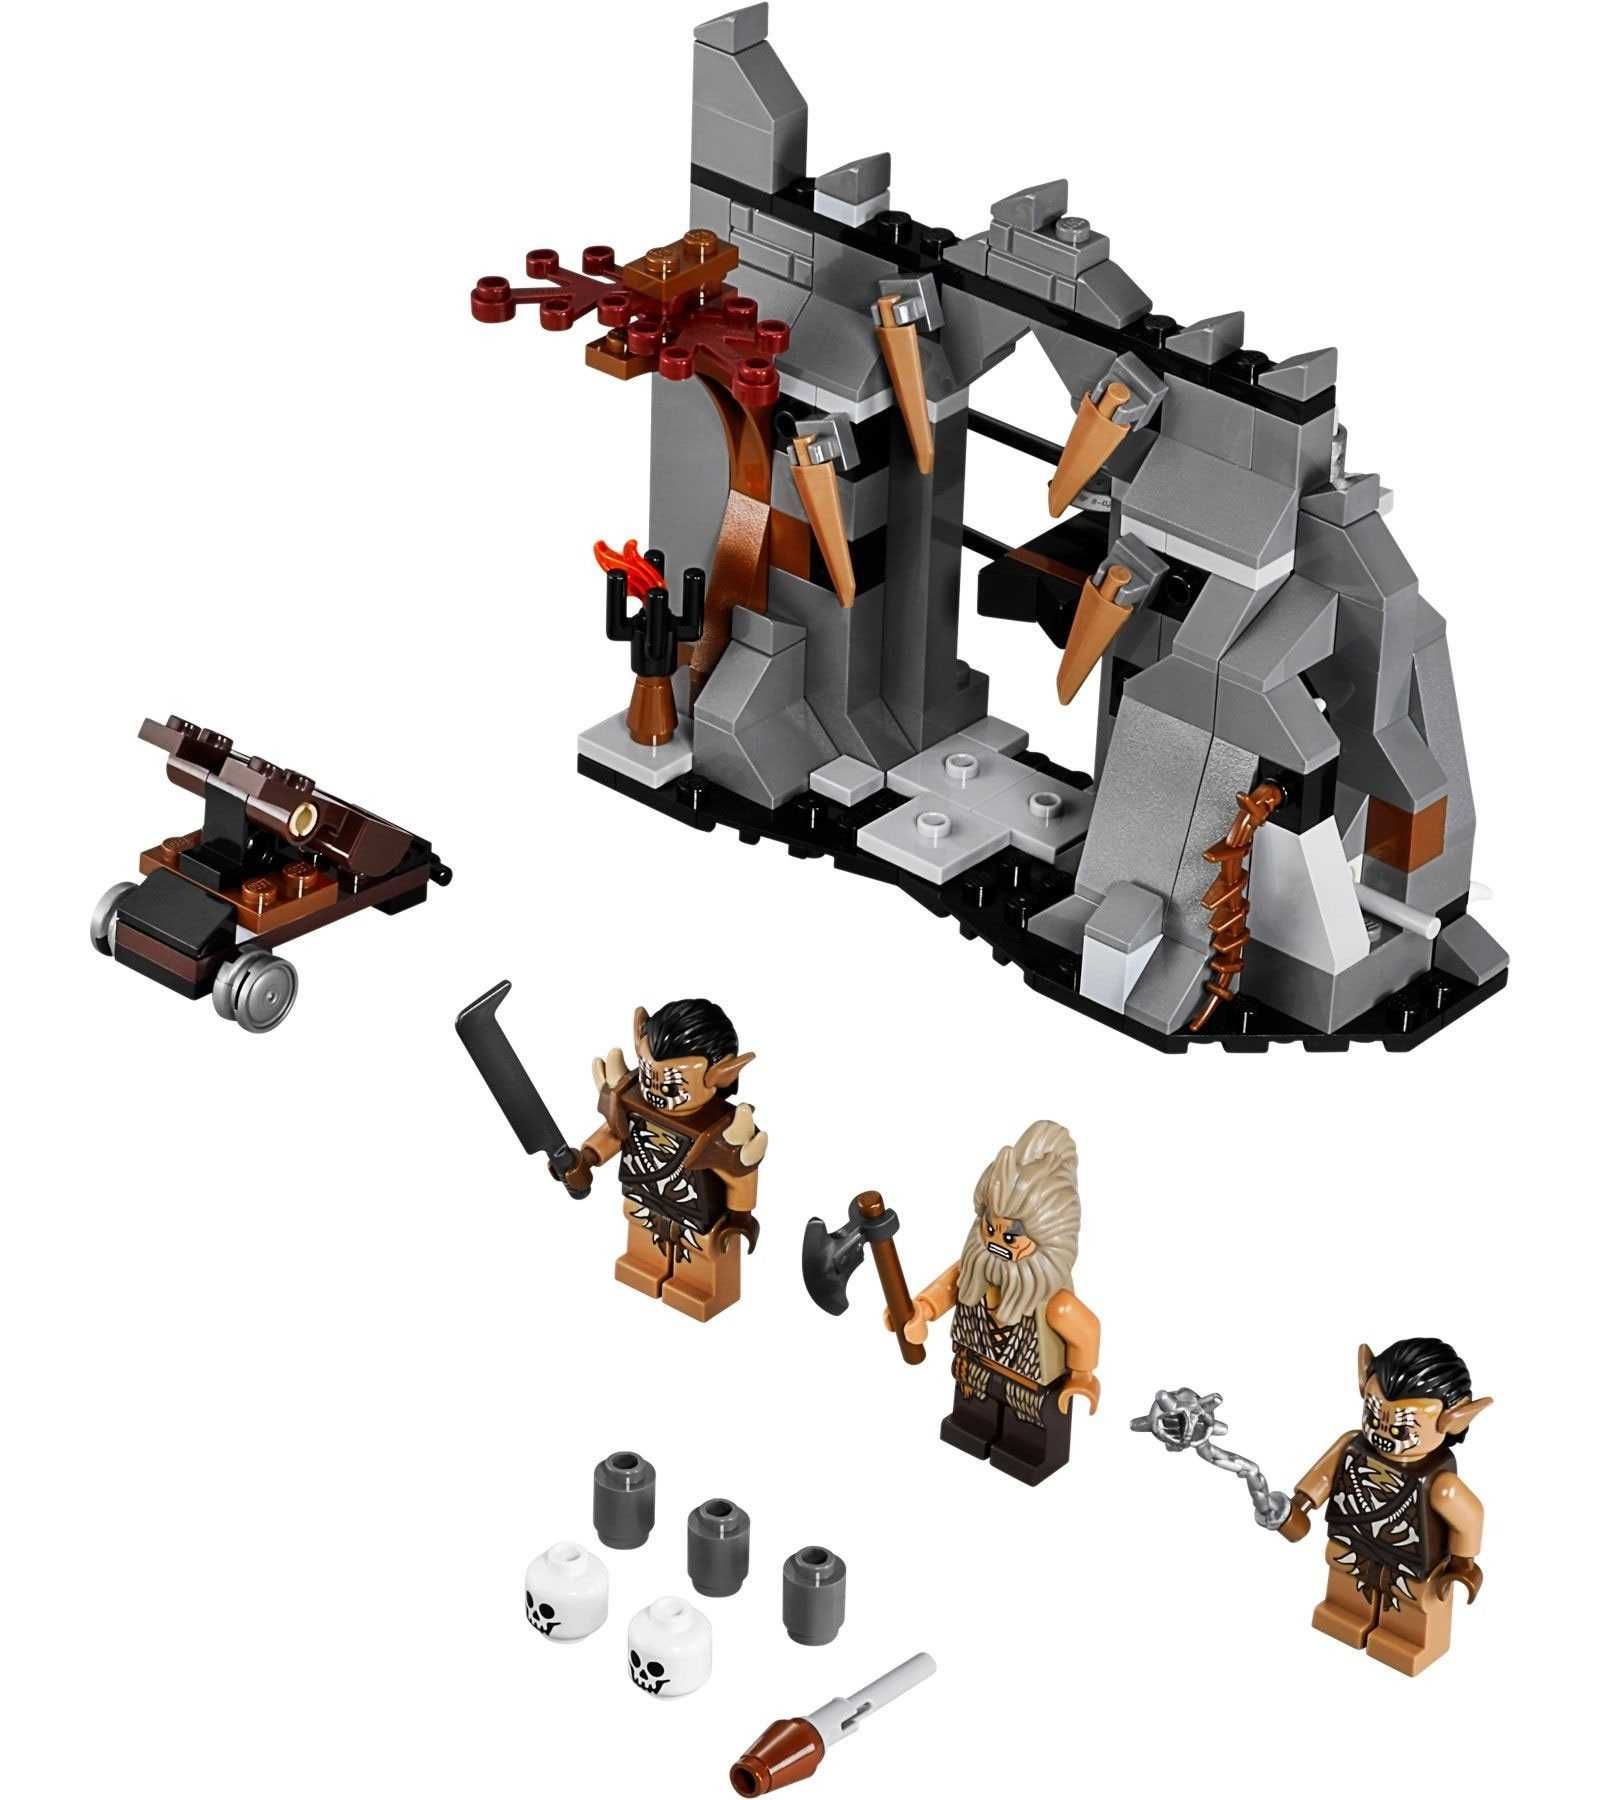 LEGO 79011 Hobbit - The Lord of the Rings - Zasadzka Dol Guldur - nowy